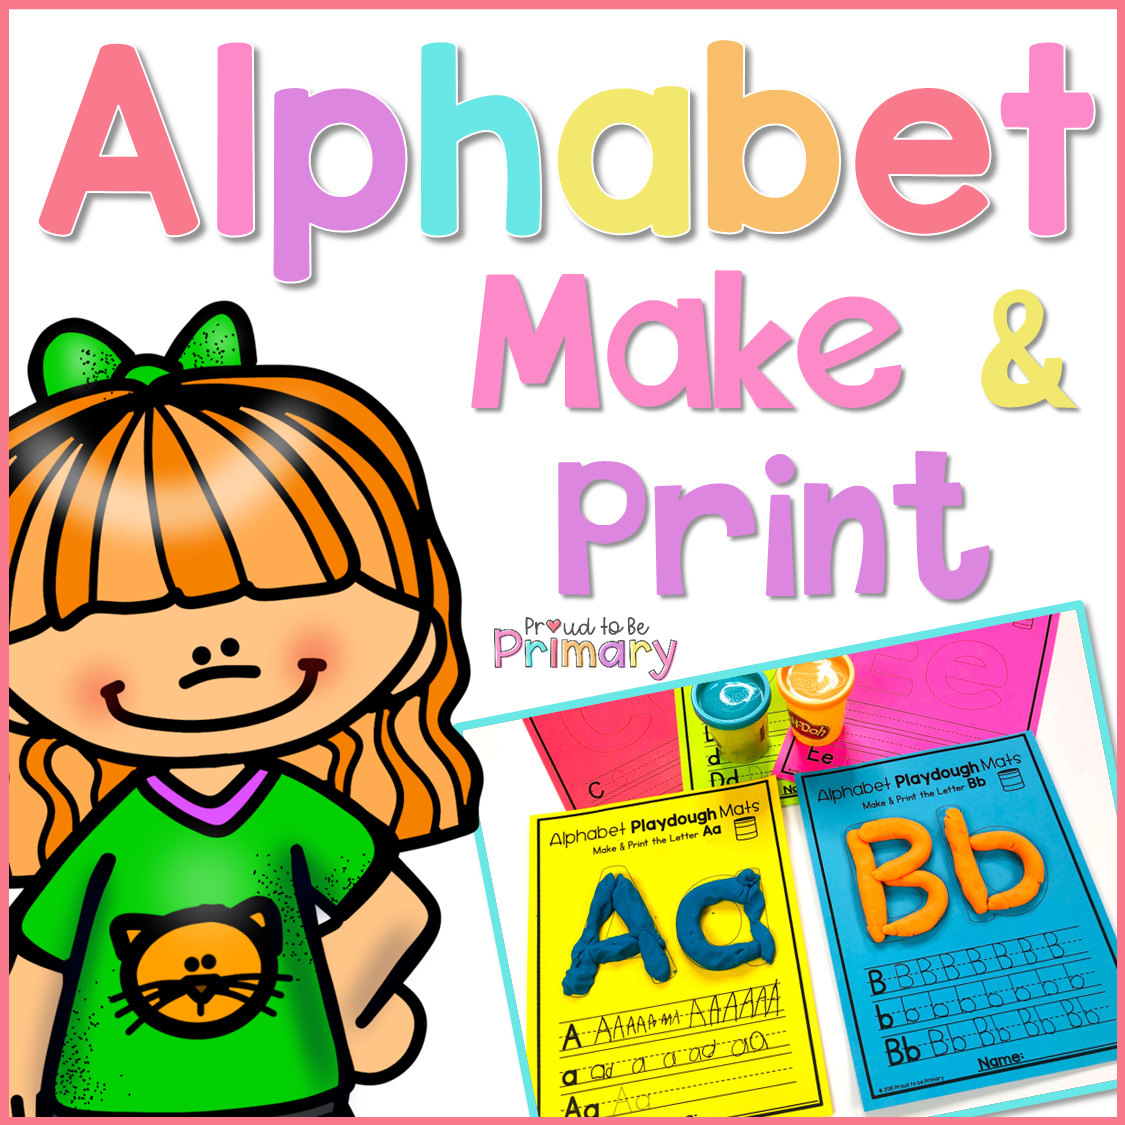 Alphabet Playdough Mats - Proud to be Primary